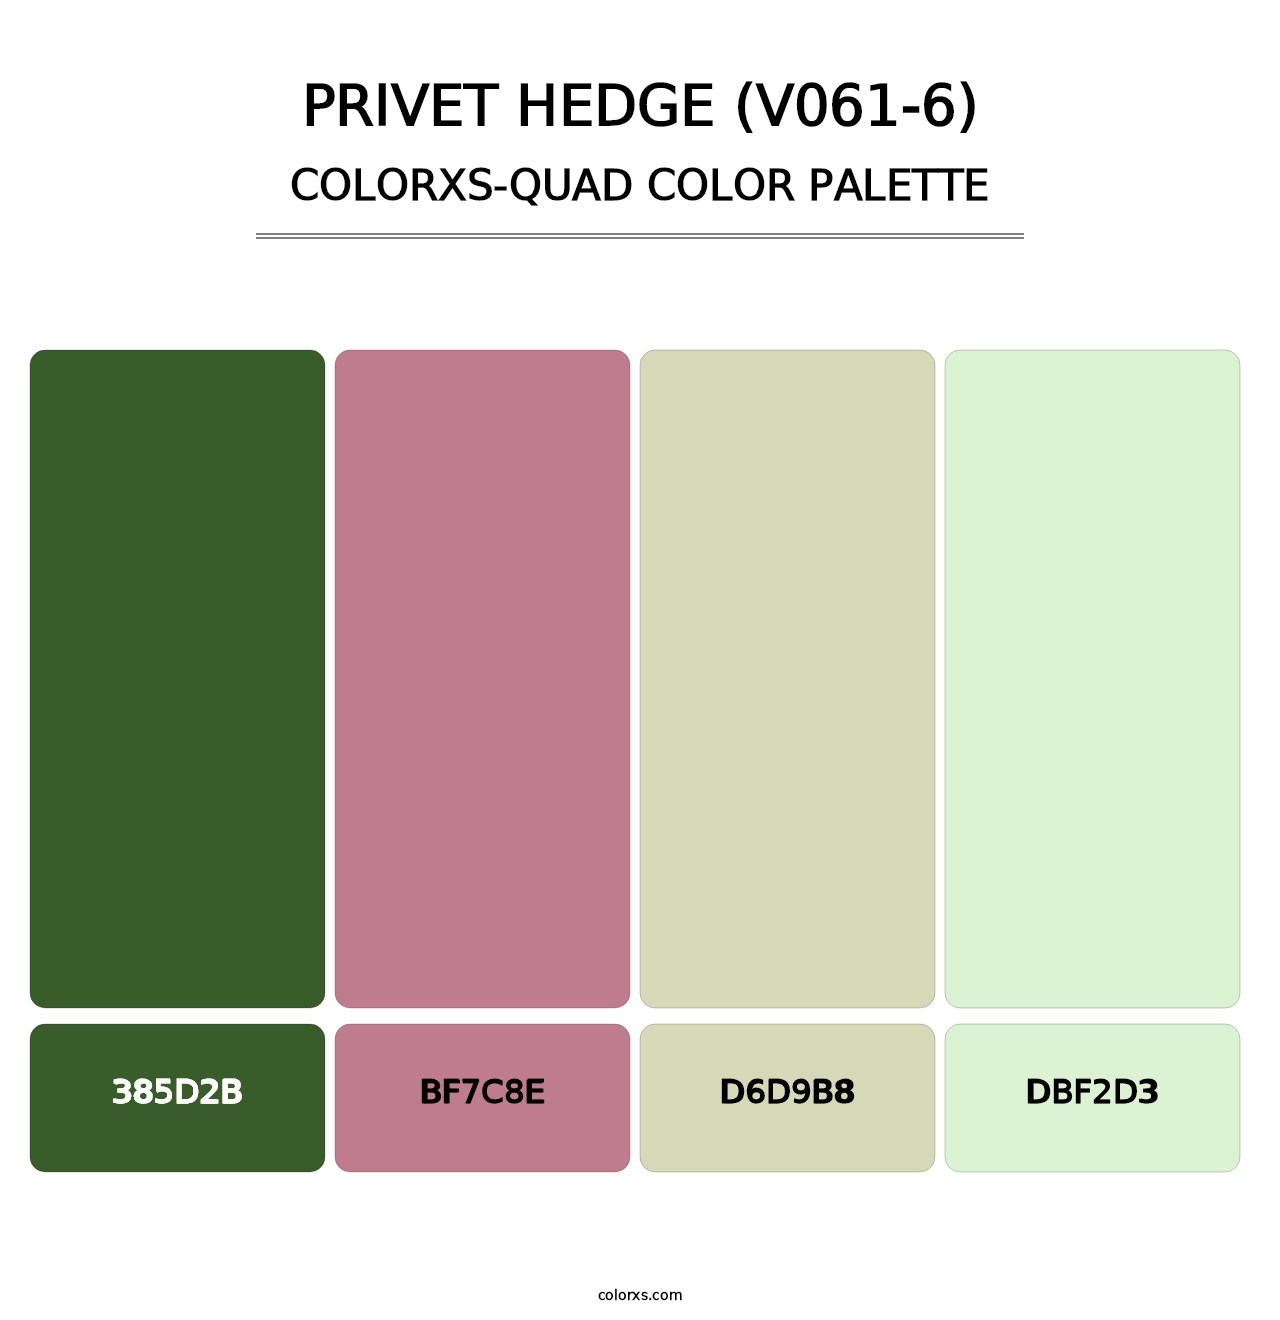 Privet Hedge (V061-6) - Colorxs Quad Palette